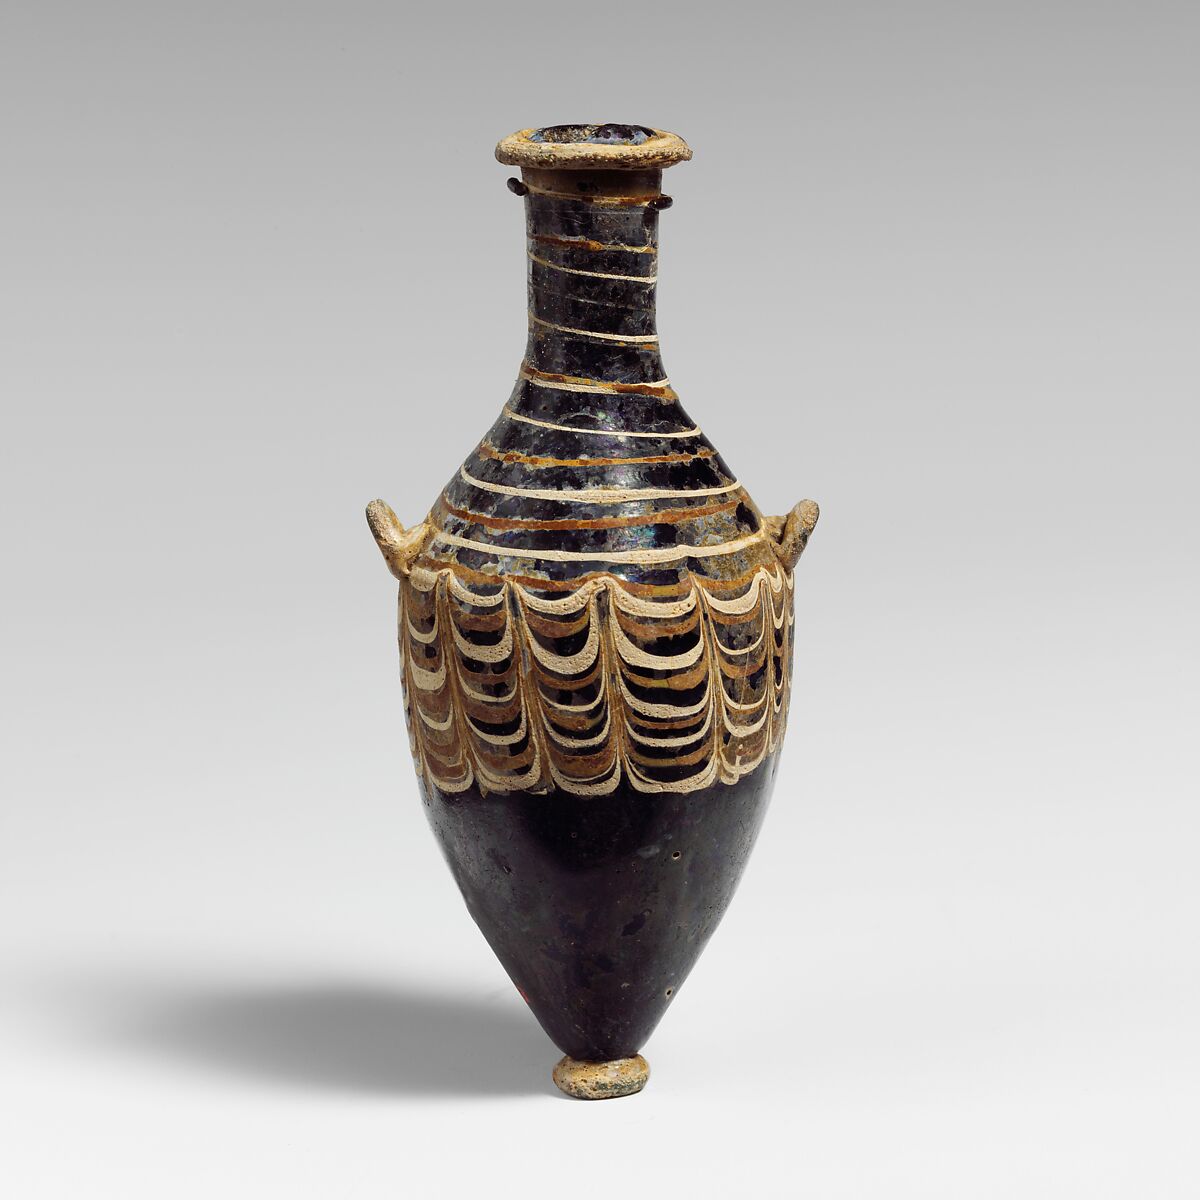 Glass unguentarium (perfume bottle), Glass, Greek, Eastern Mediterranean, possibly Alexandrian 